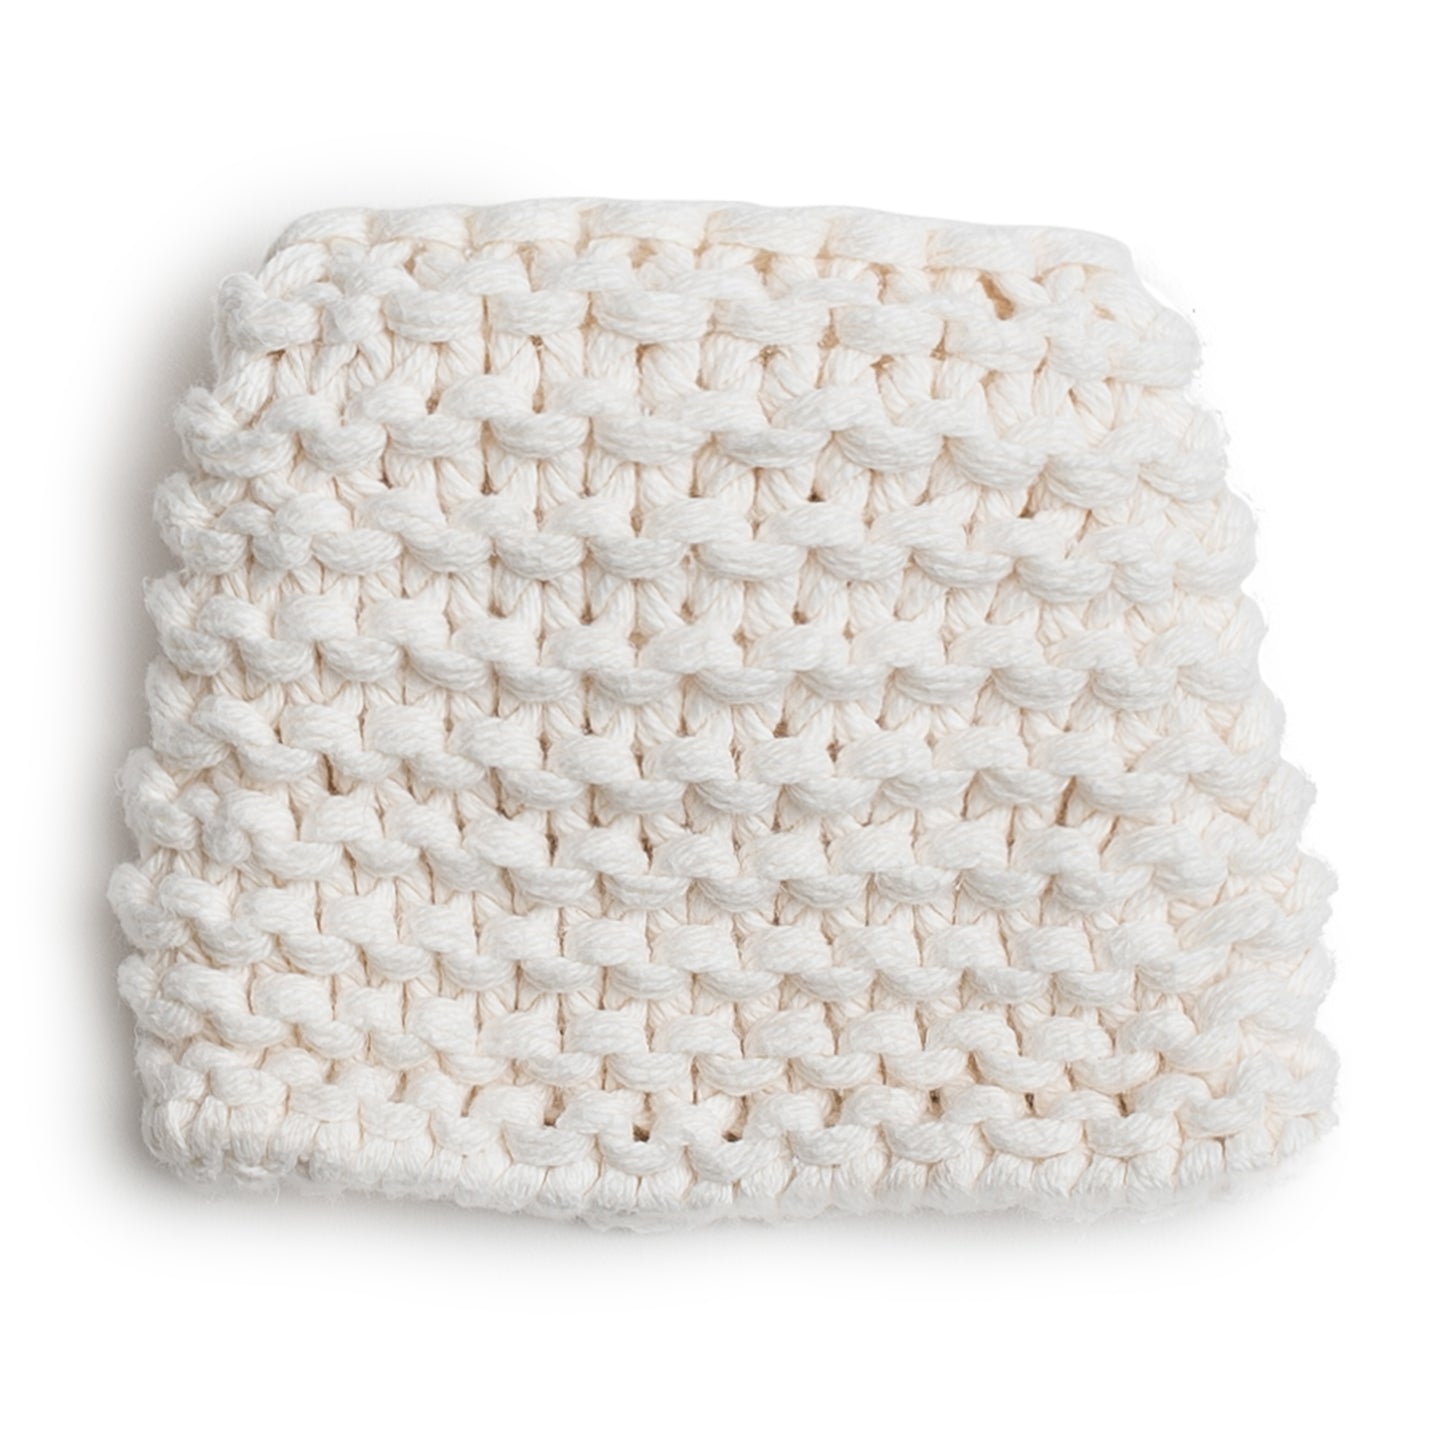 Zestt - Organic Cotton Baby Blanket & Hat Gift Set - White